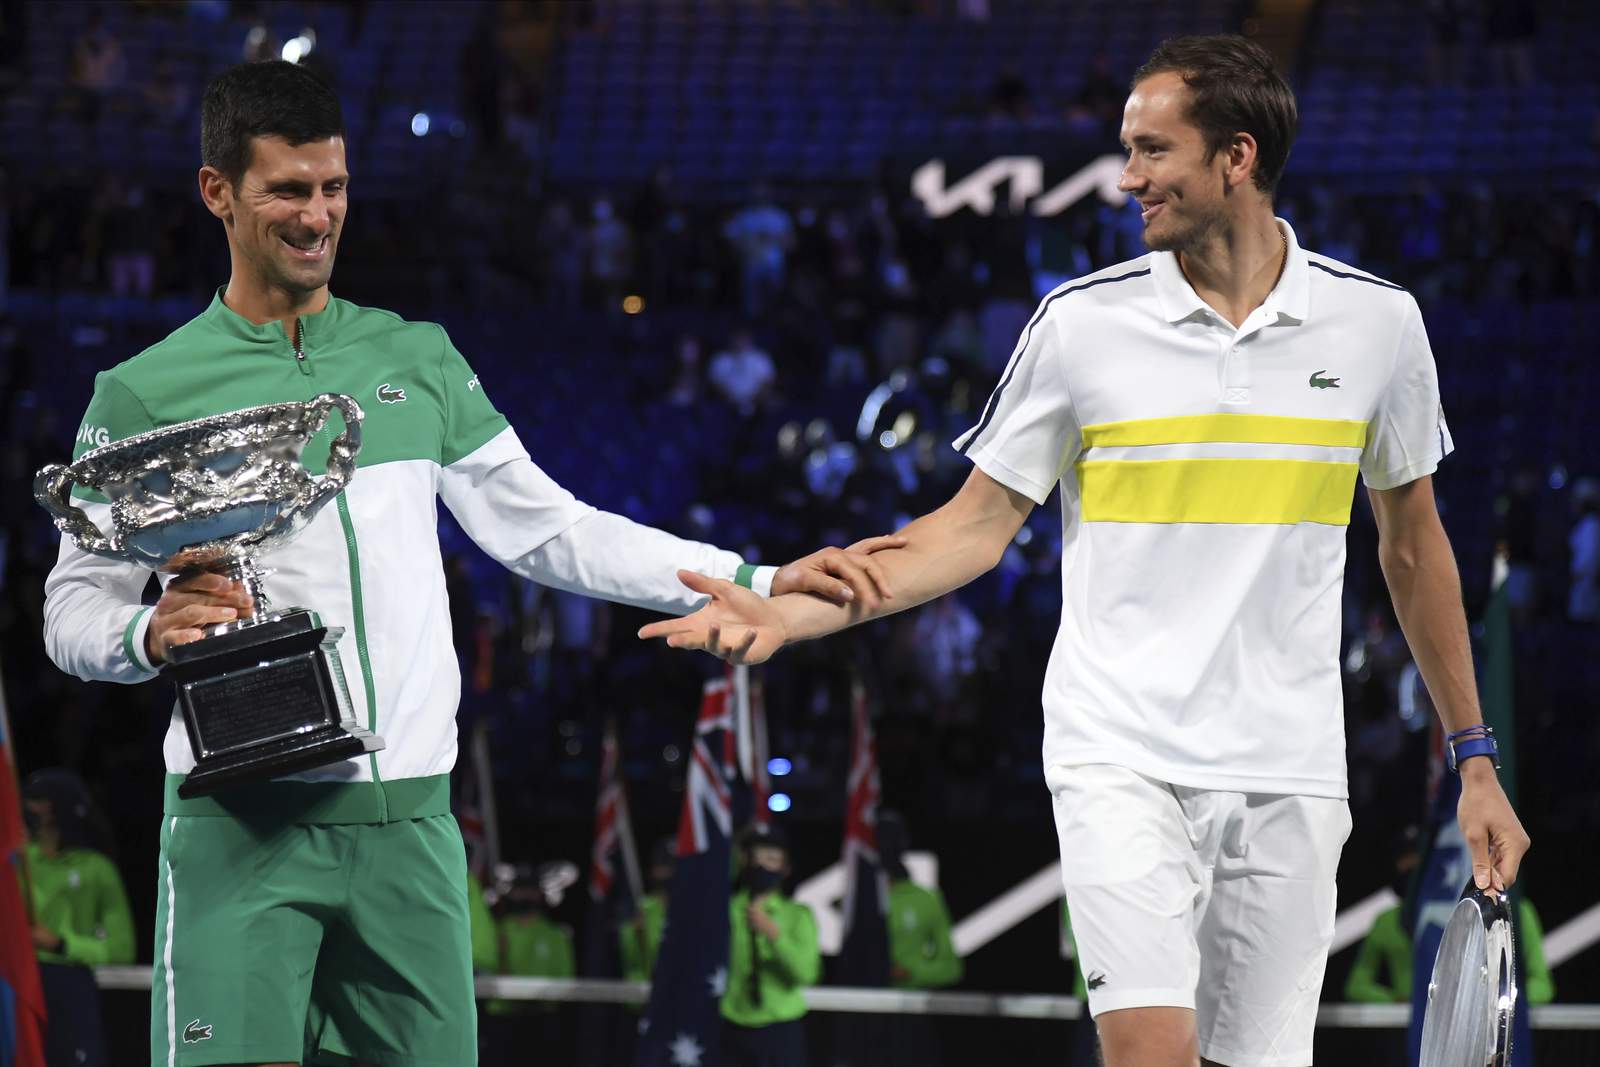 Medvedev recalls long-ago practice session with Djokovic